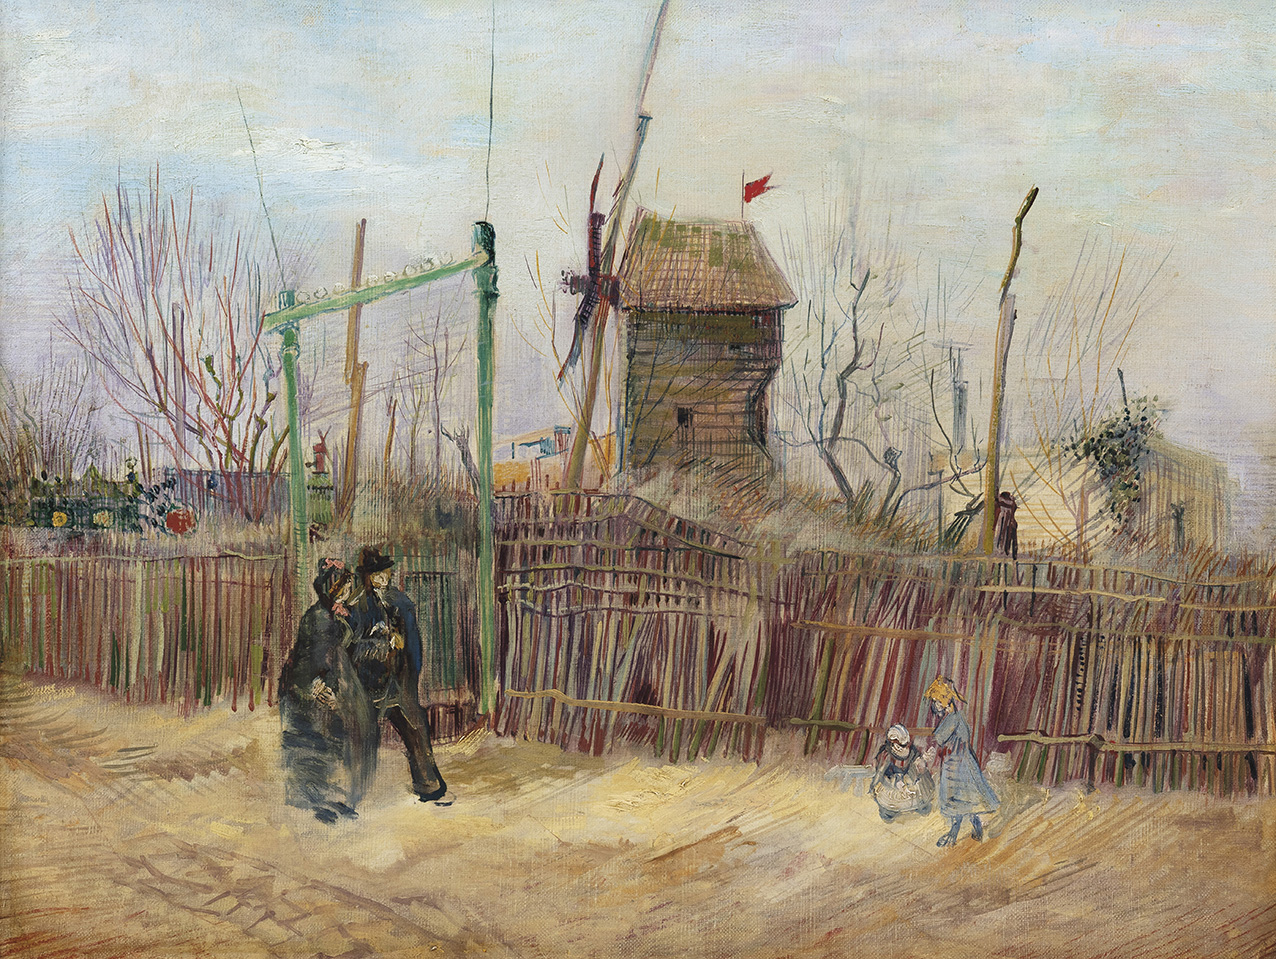 Van Gogh, des adjudications en montagne russe